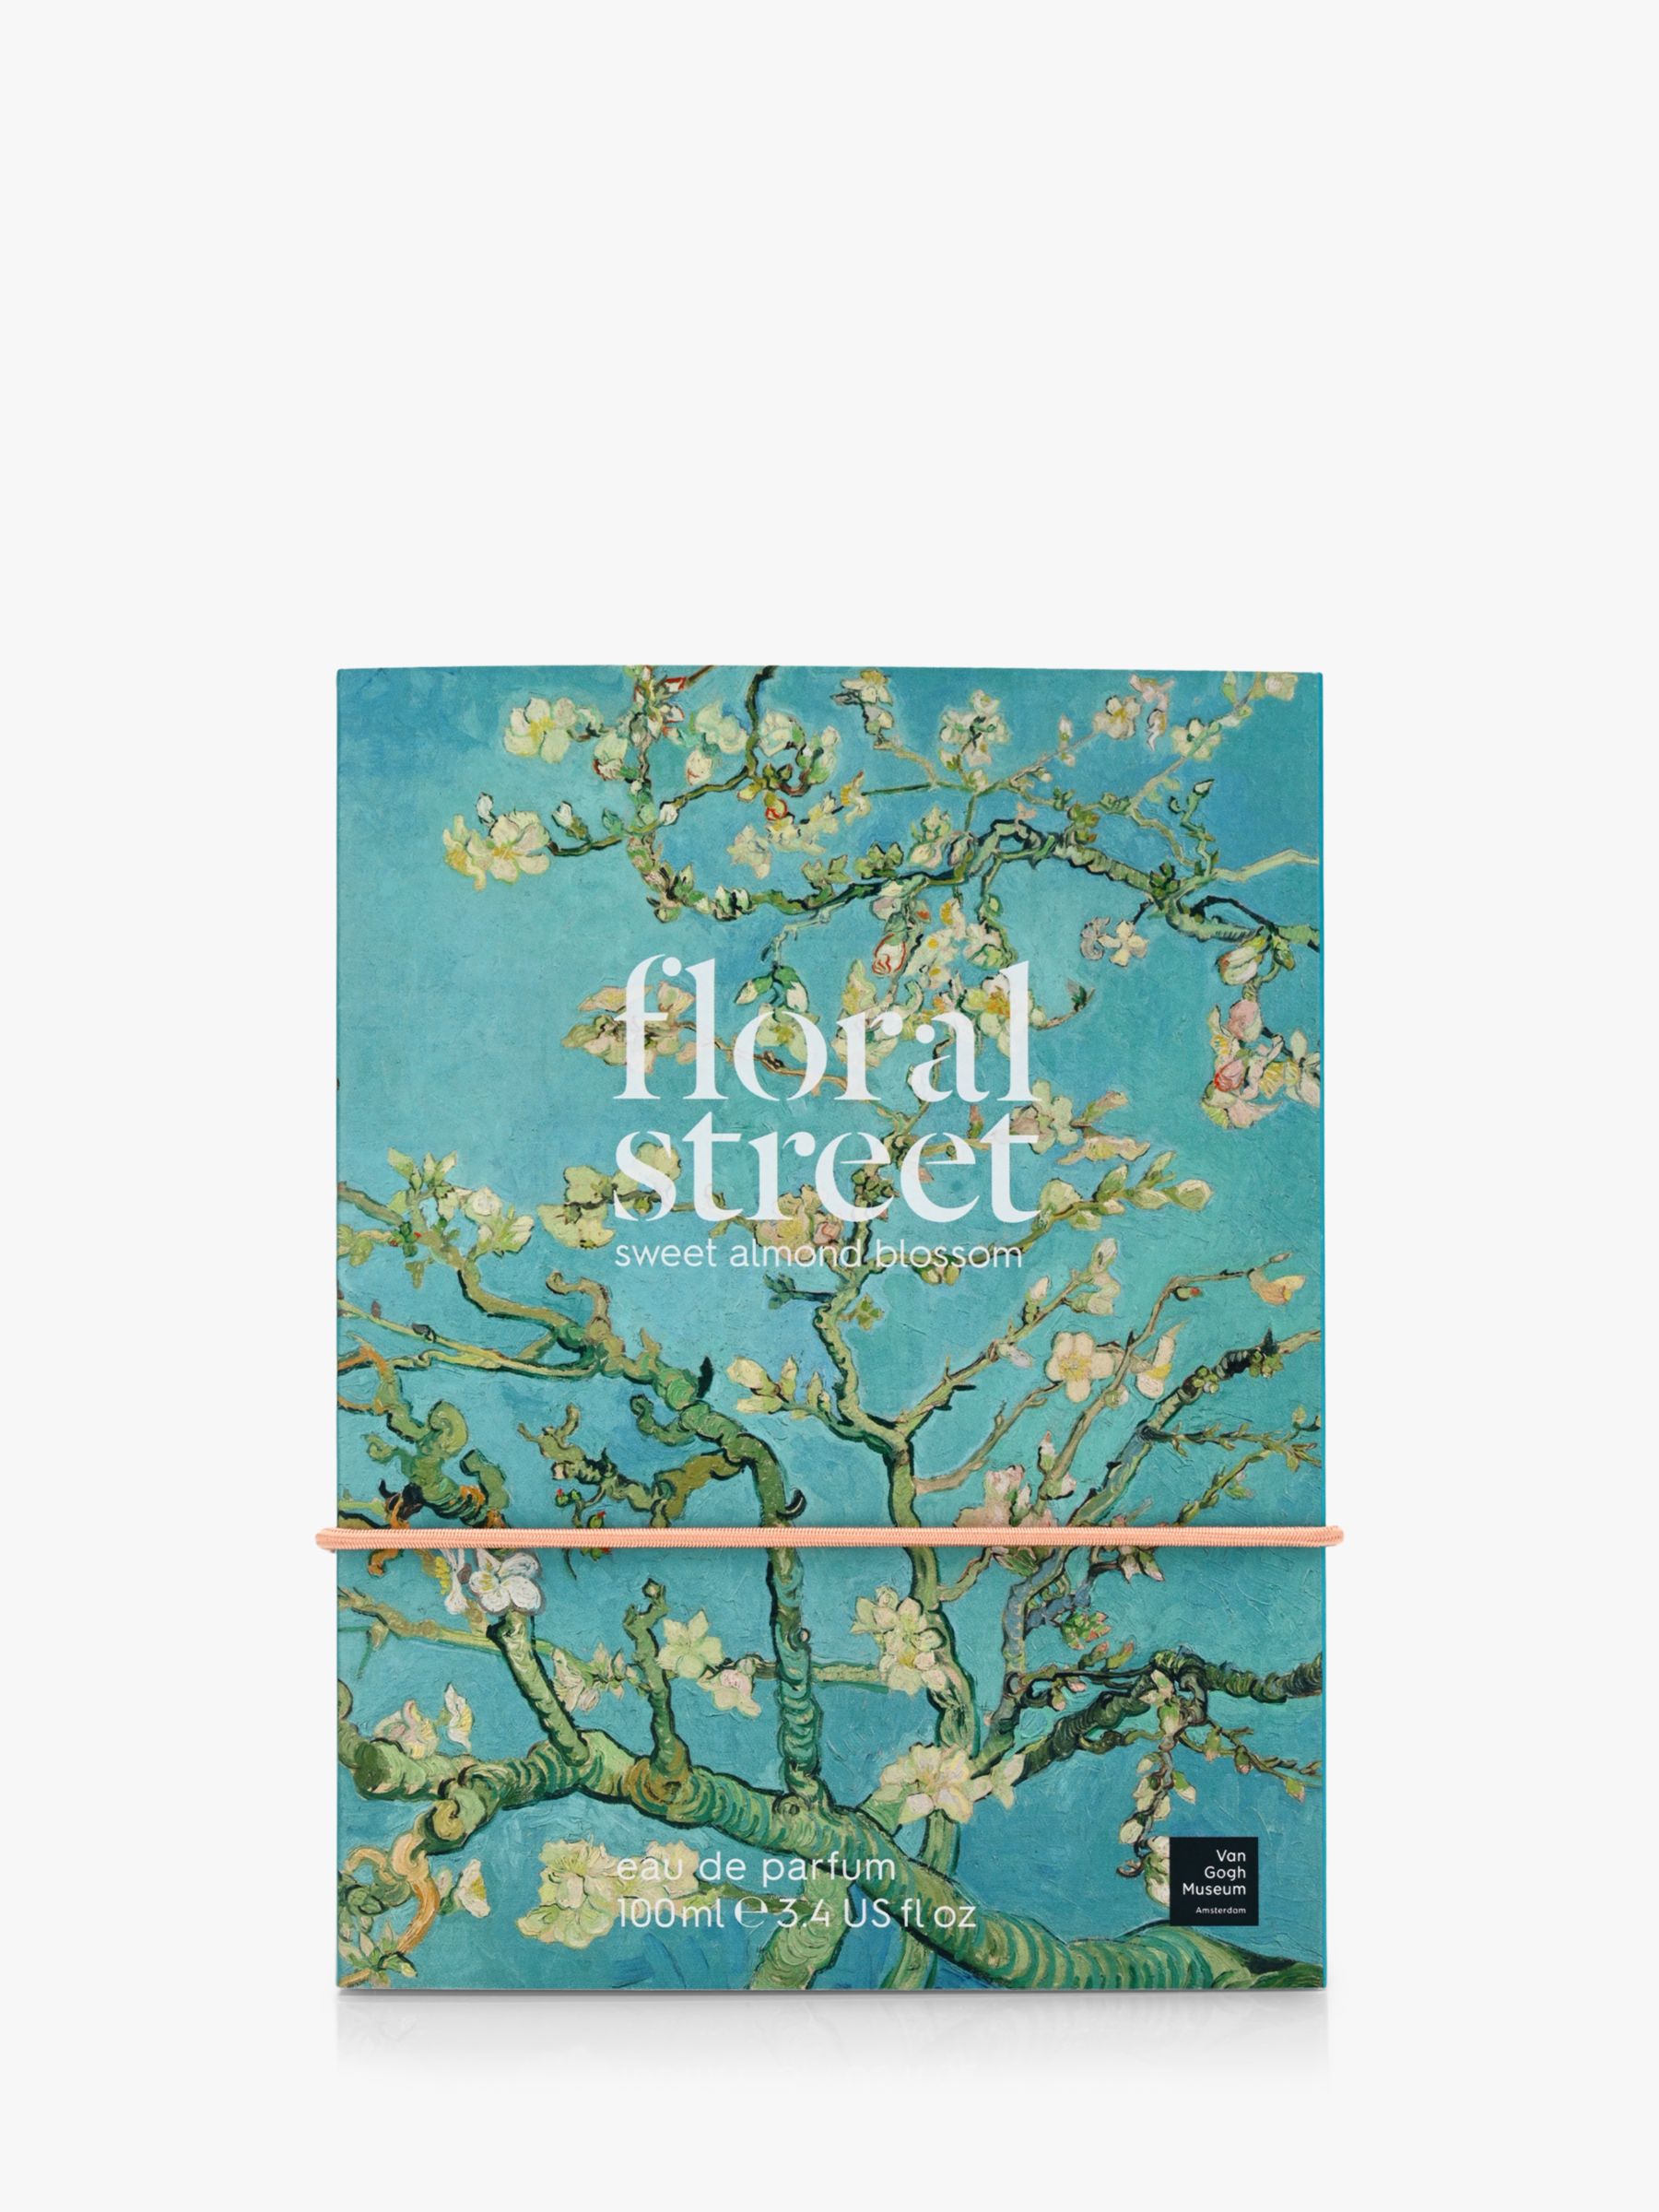 Floral Street x Van Gogh Museum Sweet  Almond Blossom Eau de Parfum, 100ml 3